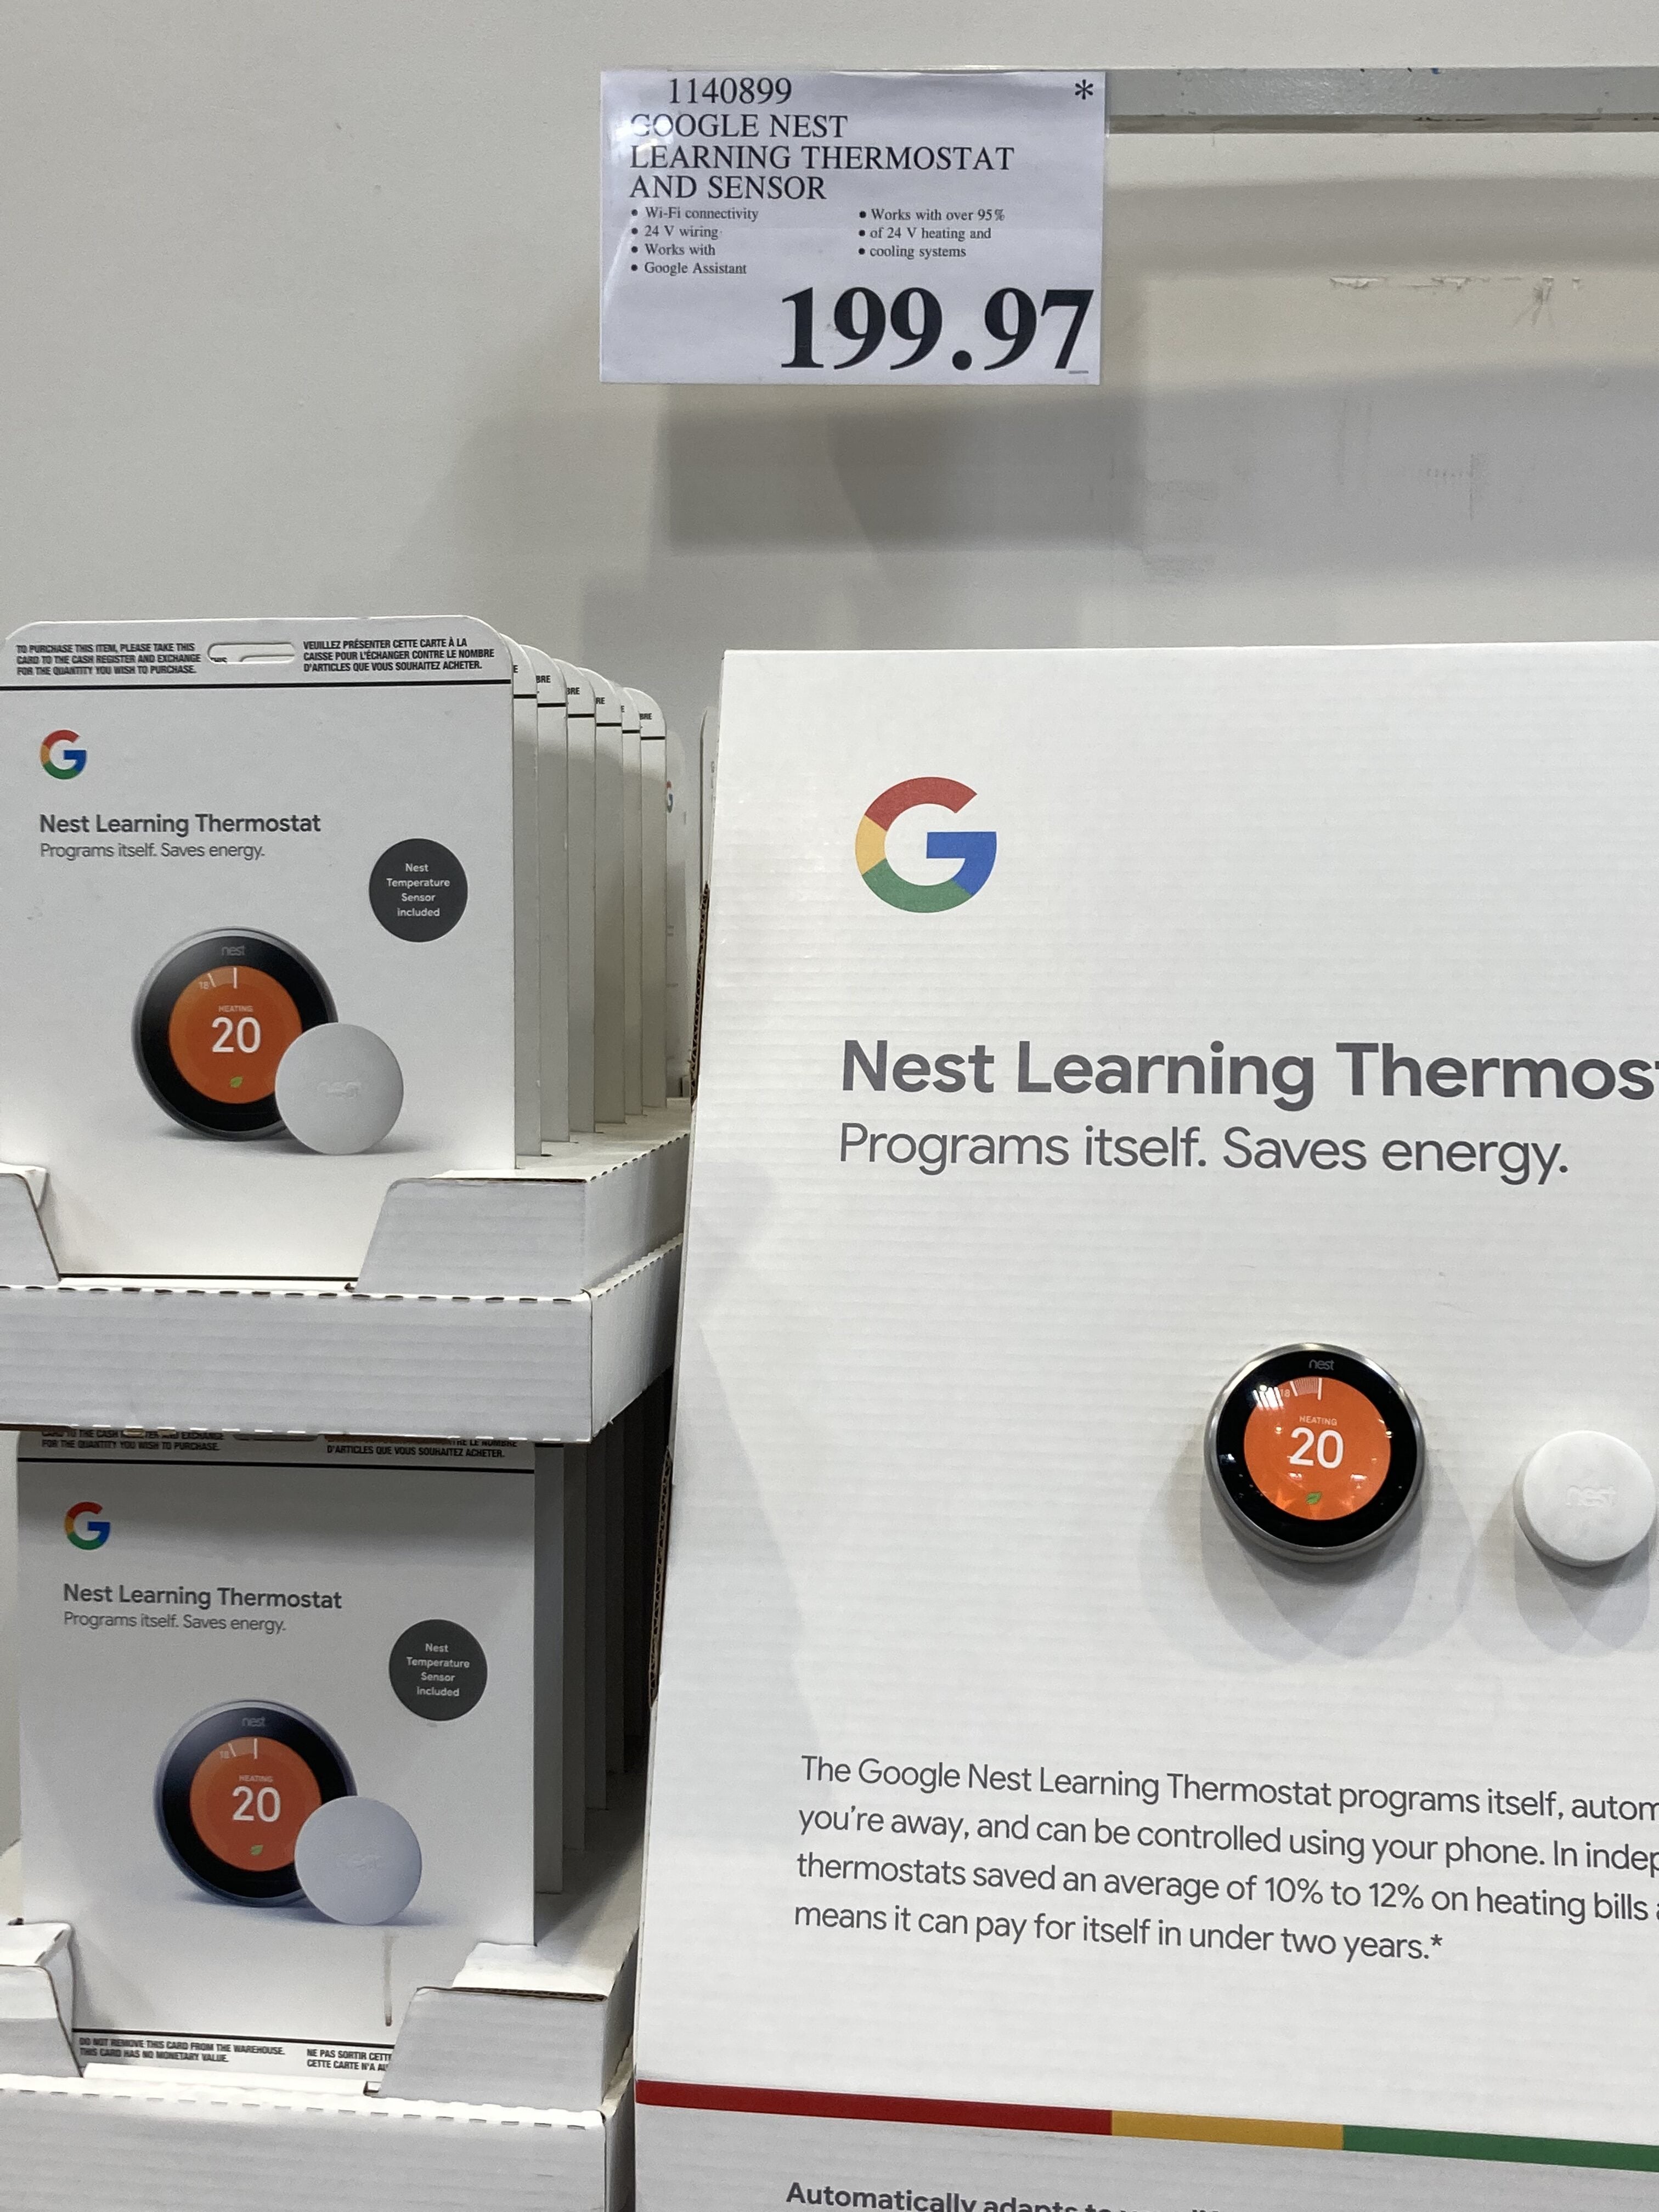 costco-google-nest-thermostat-with-sensor-199-97-reg-339-in-store